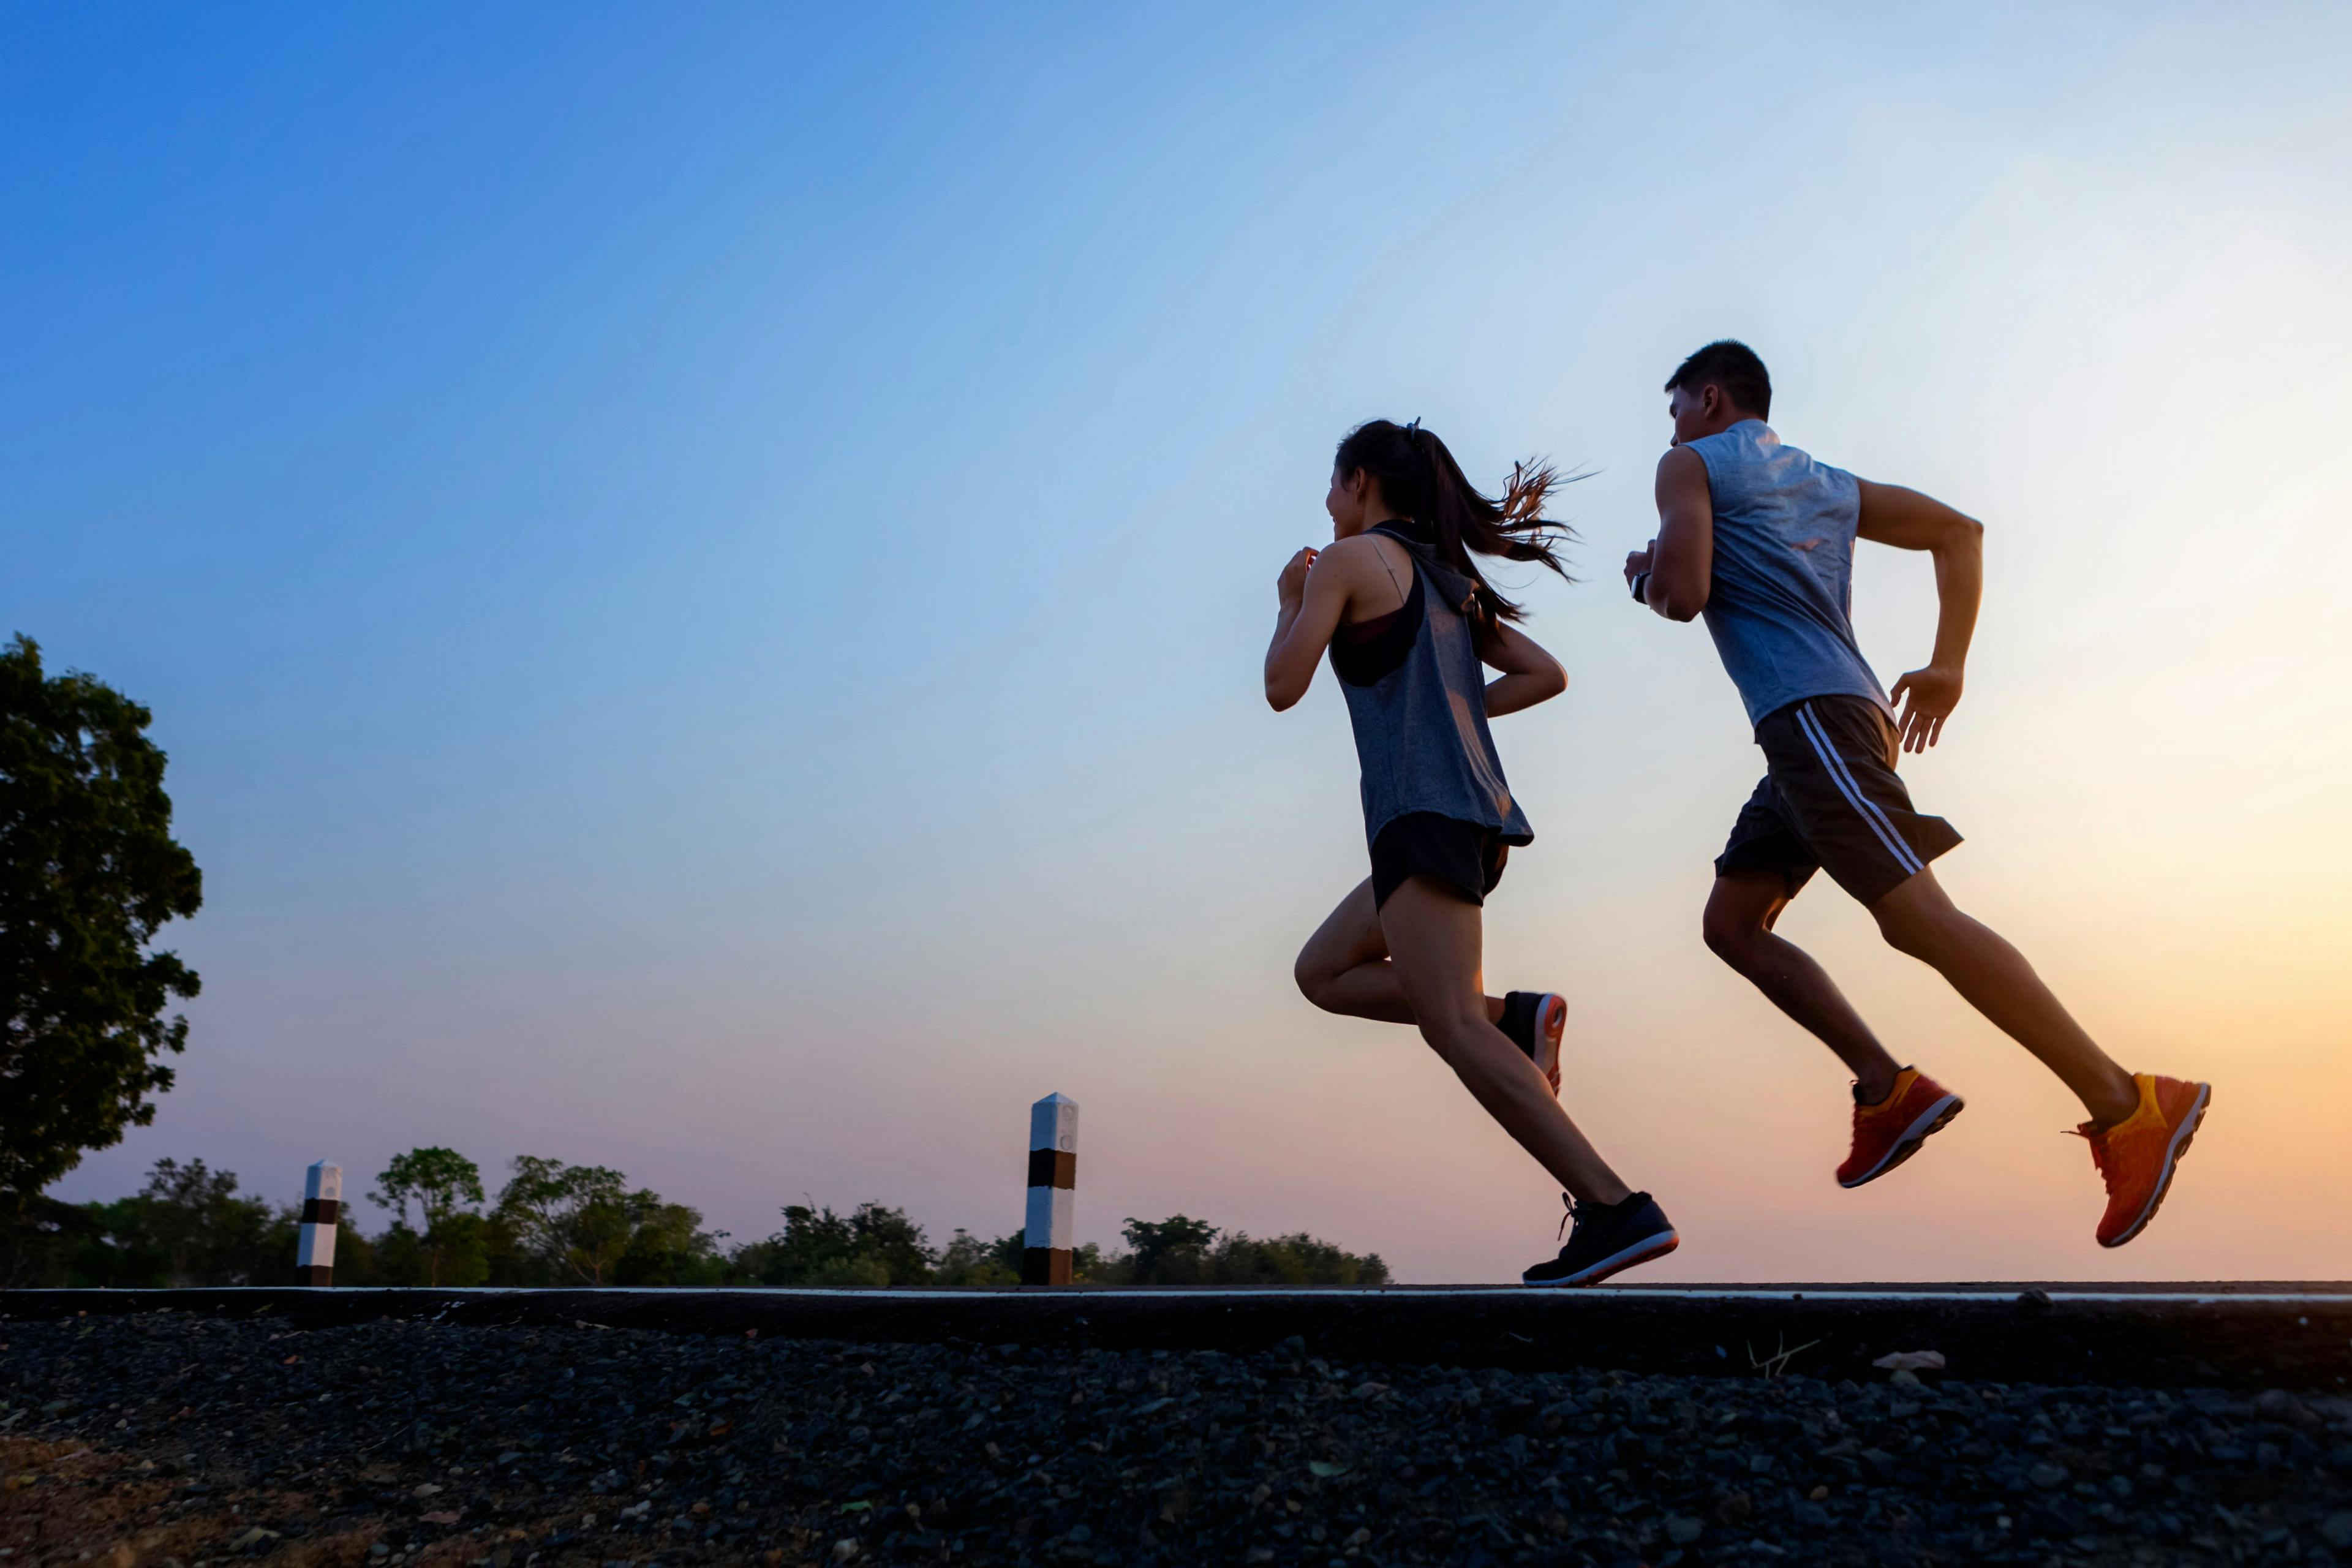 Running at sunrise couple exercising for marathon and workout | Image Credit: bunyarit - stock.adobe.com